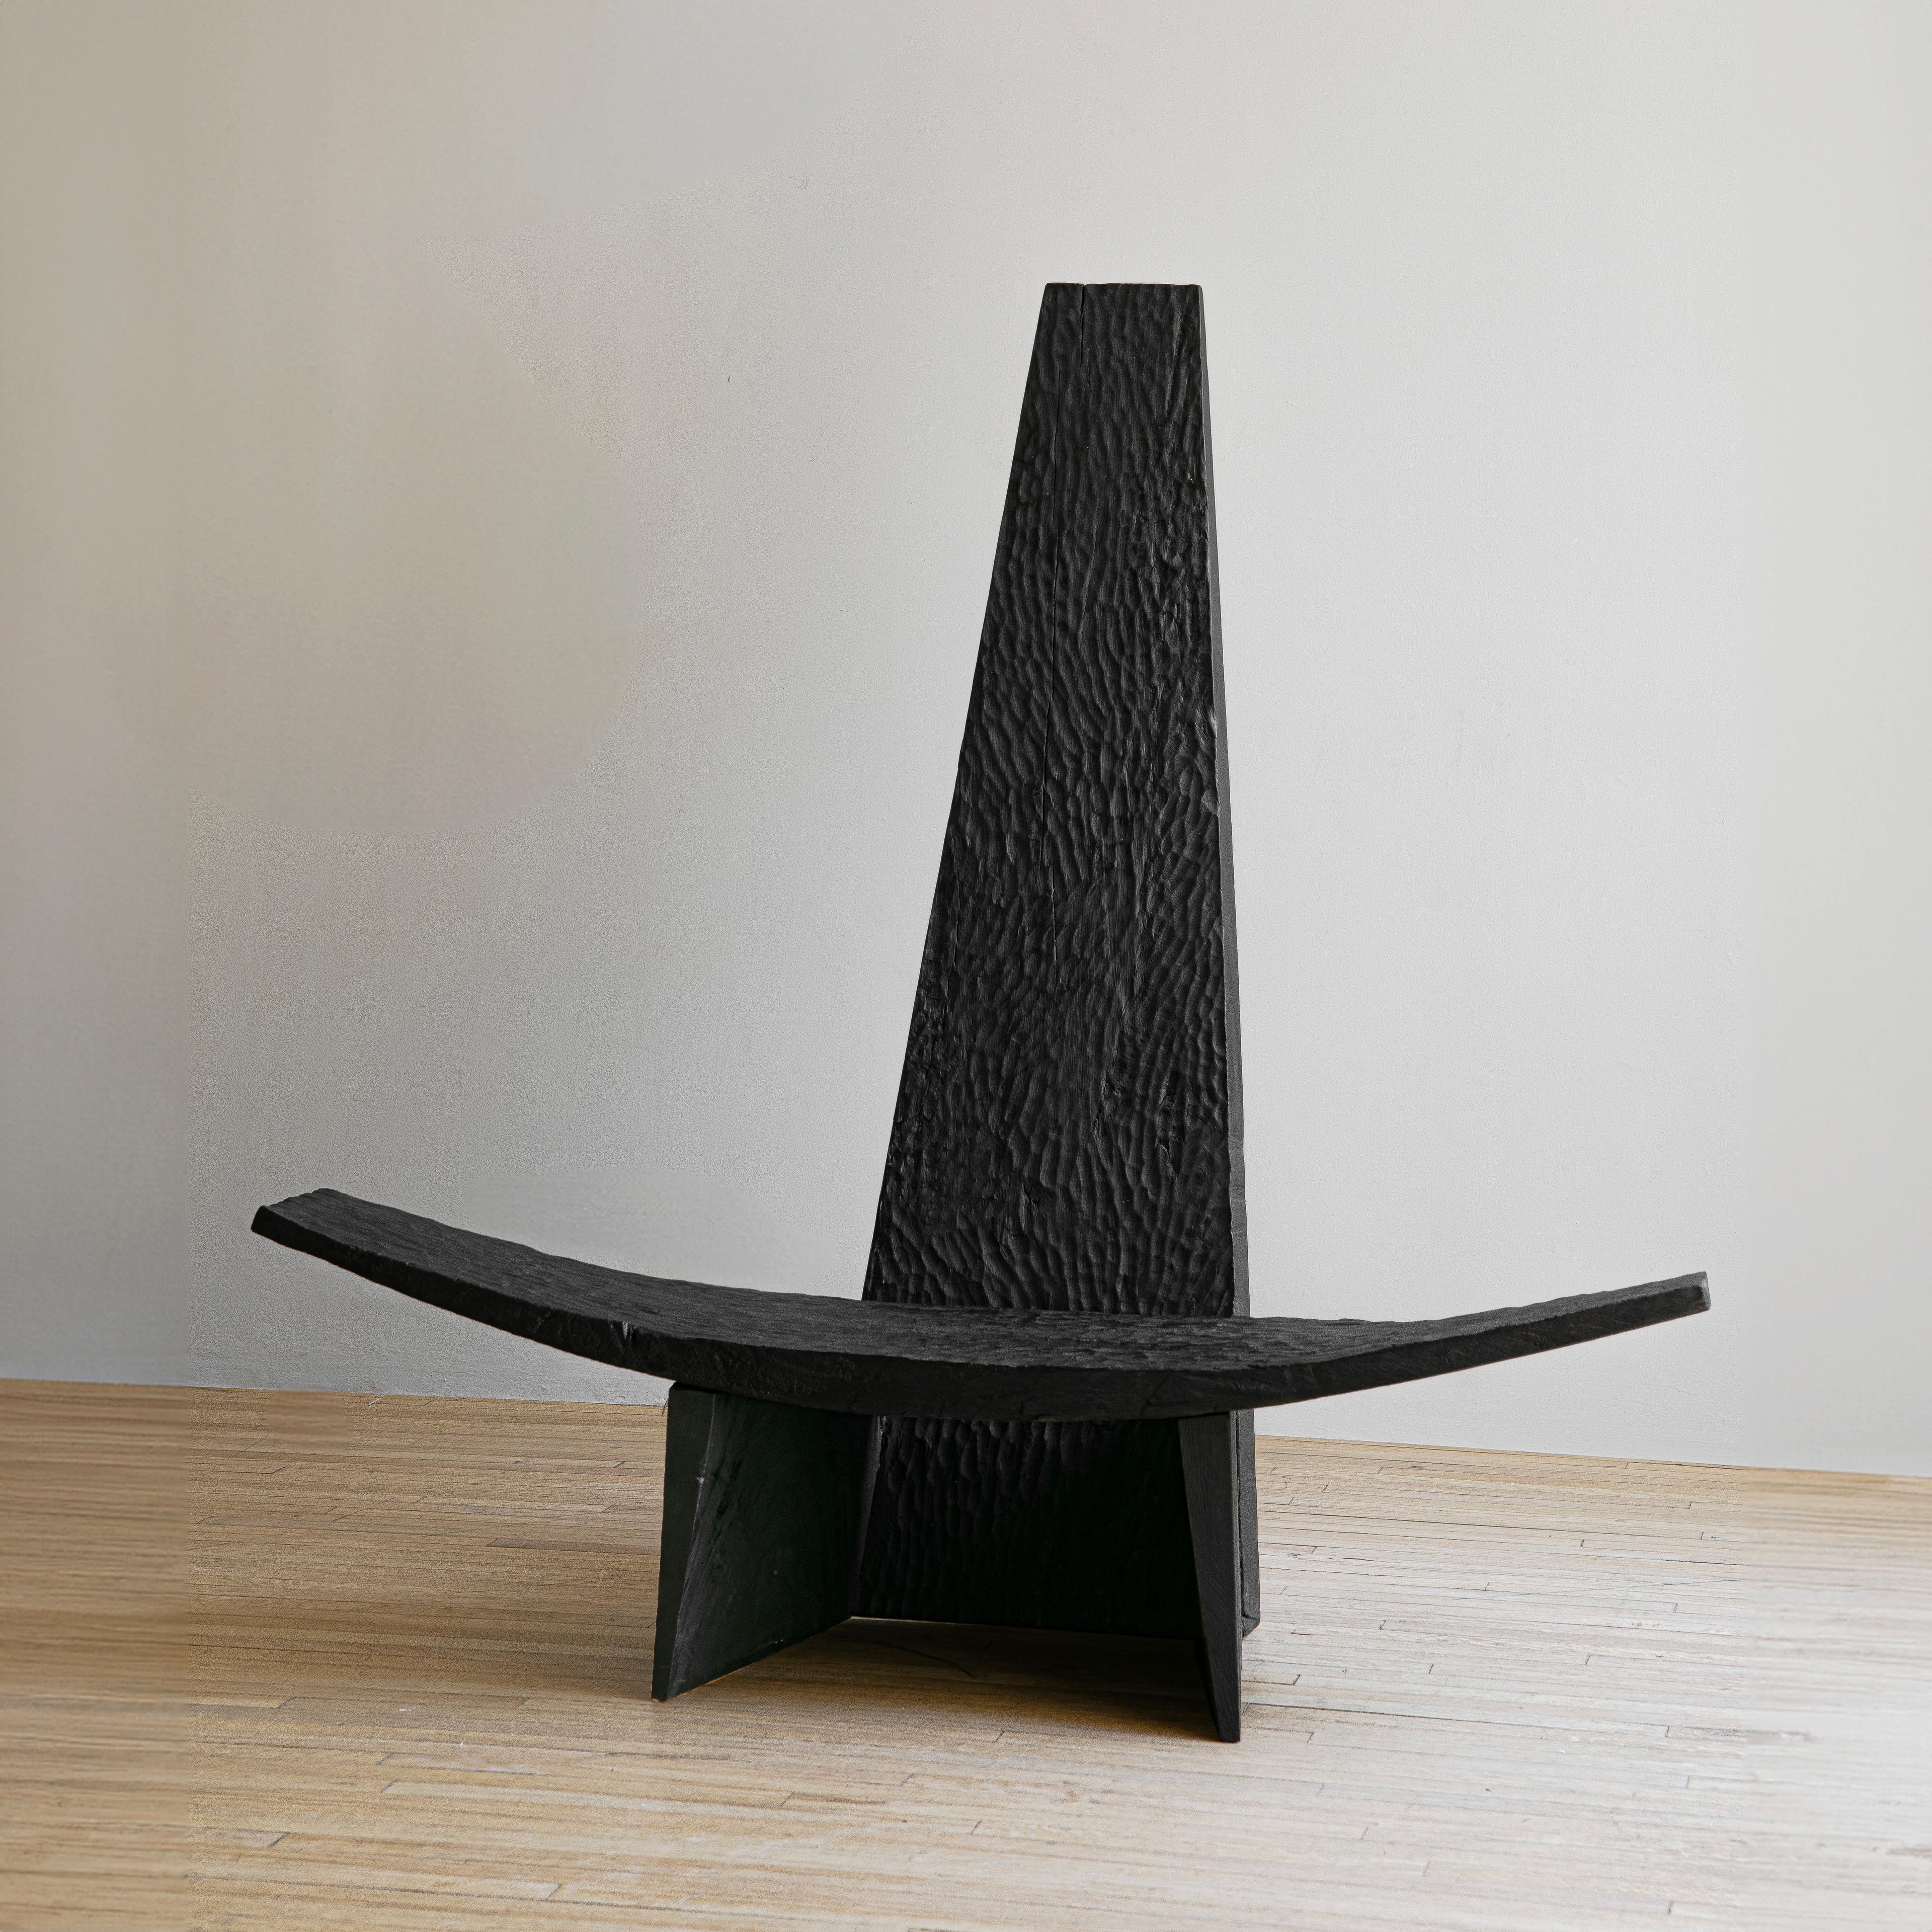 Ewe Studio: Ateliers Courbet: Partera Chair